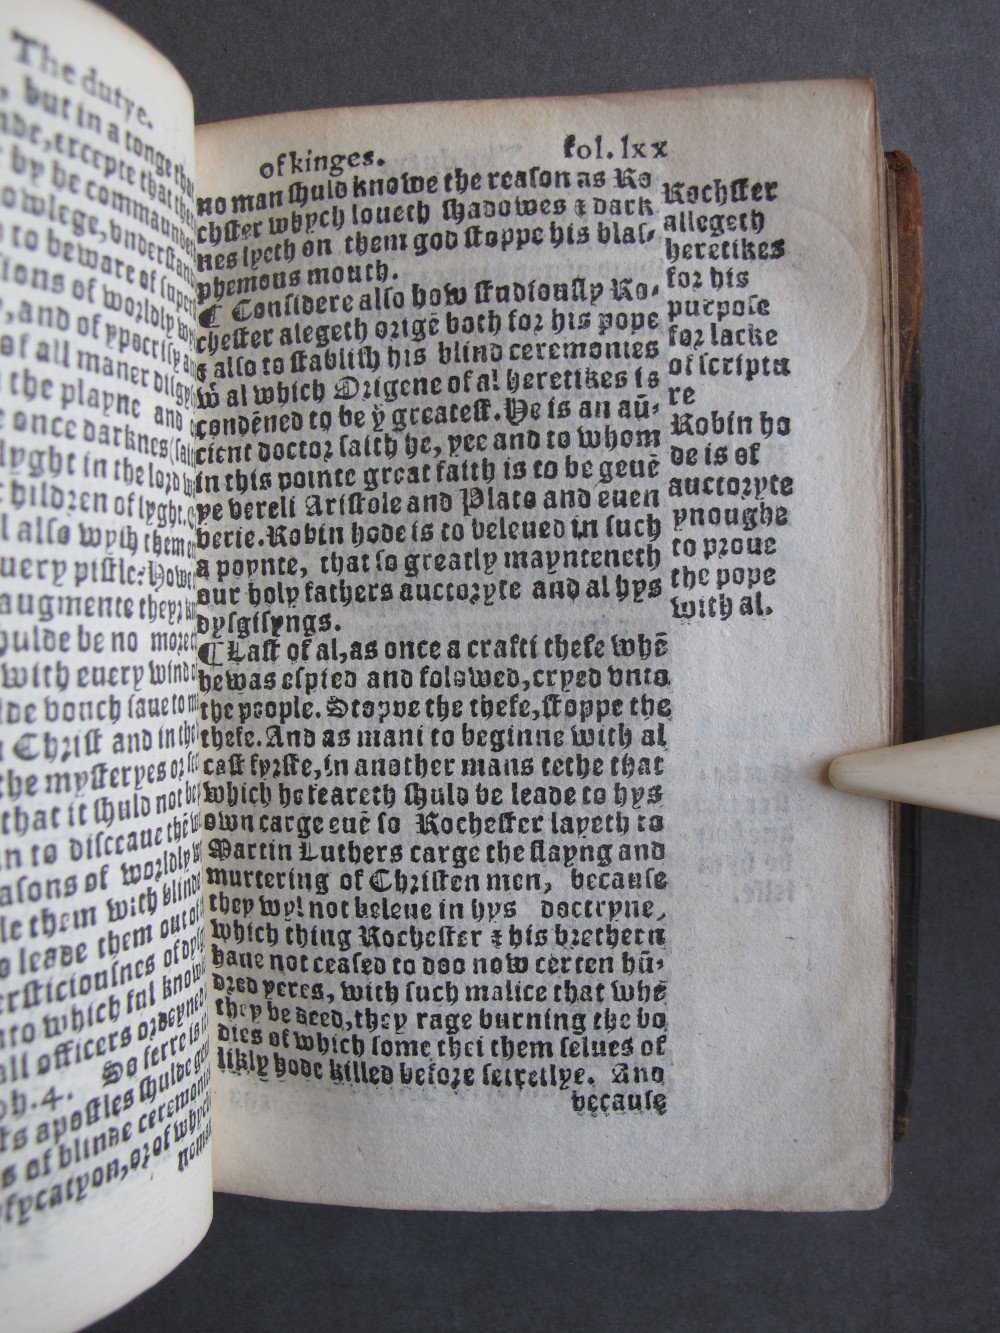 1 Folio I6 recto